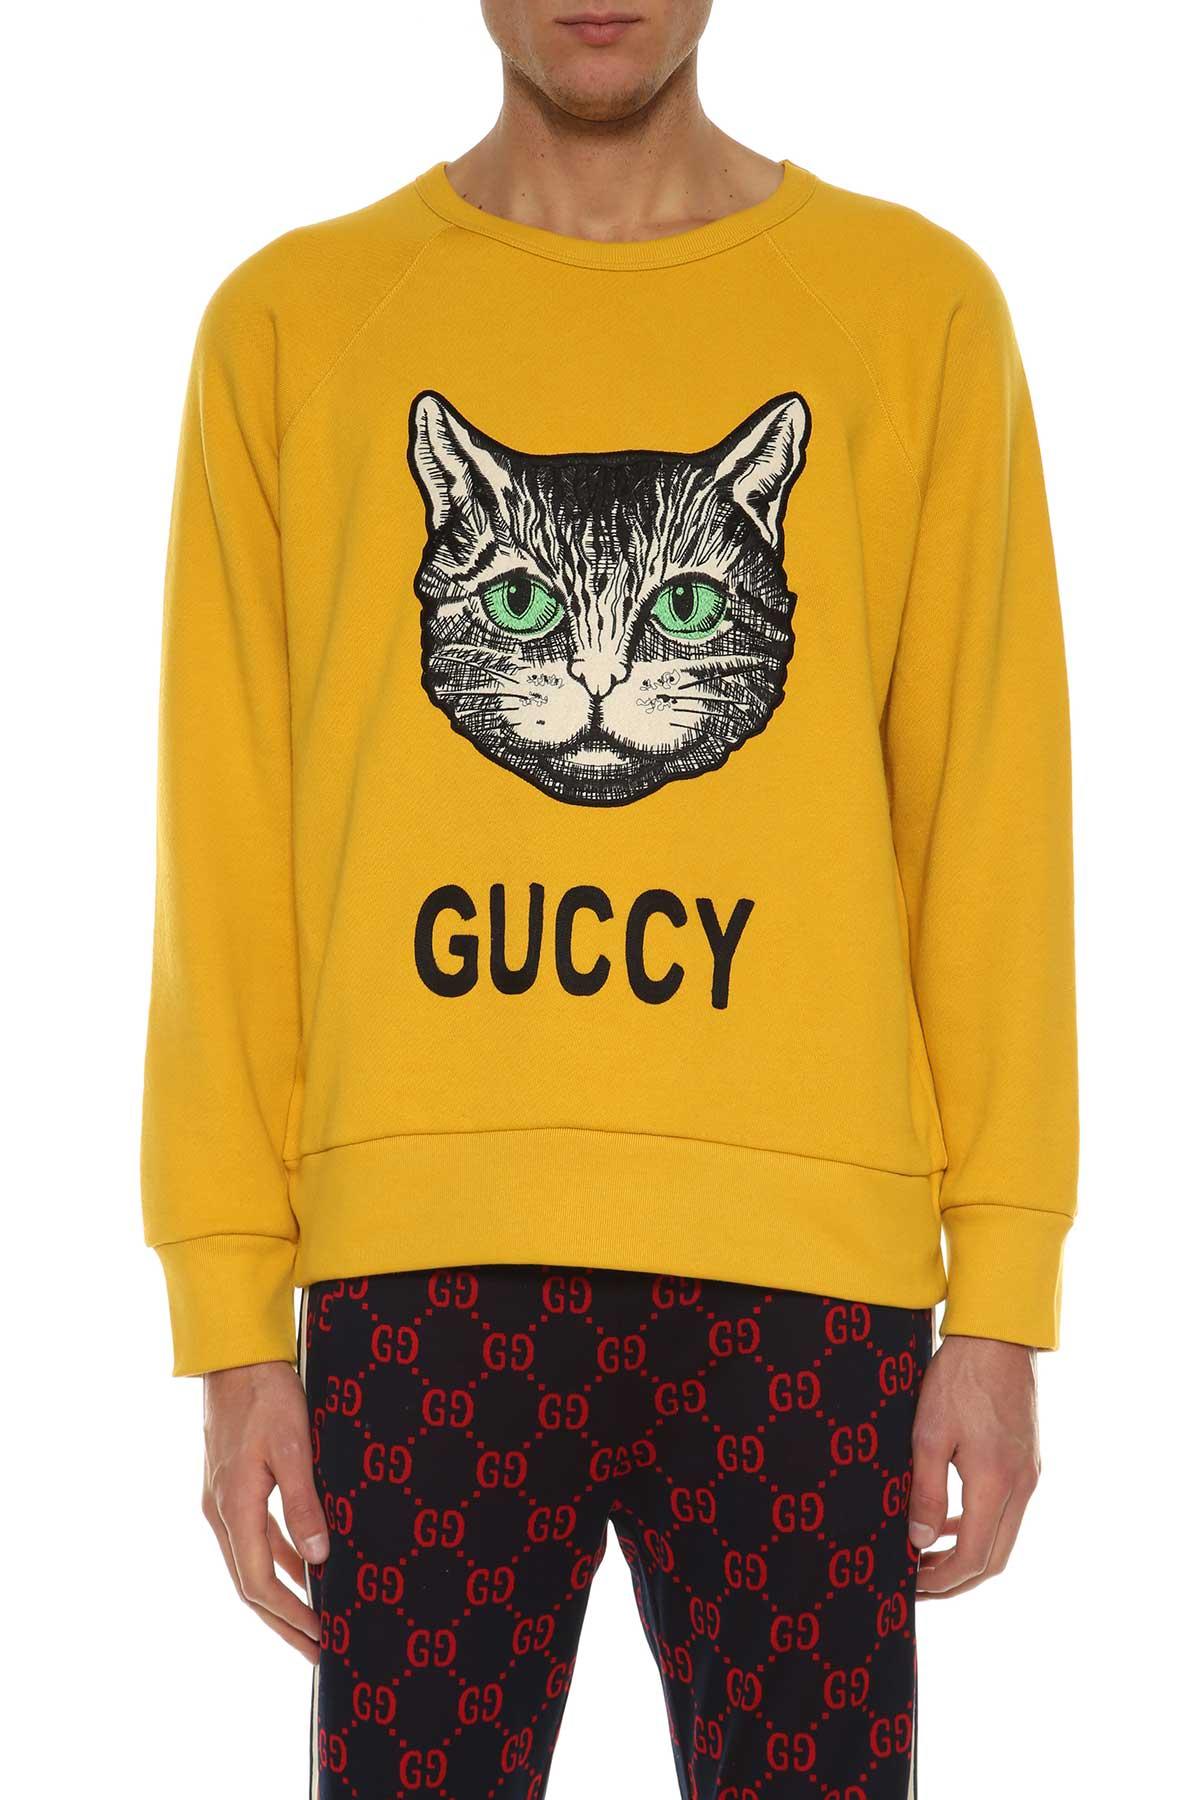 gucci cat sweatshirt